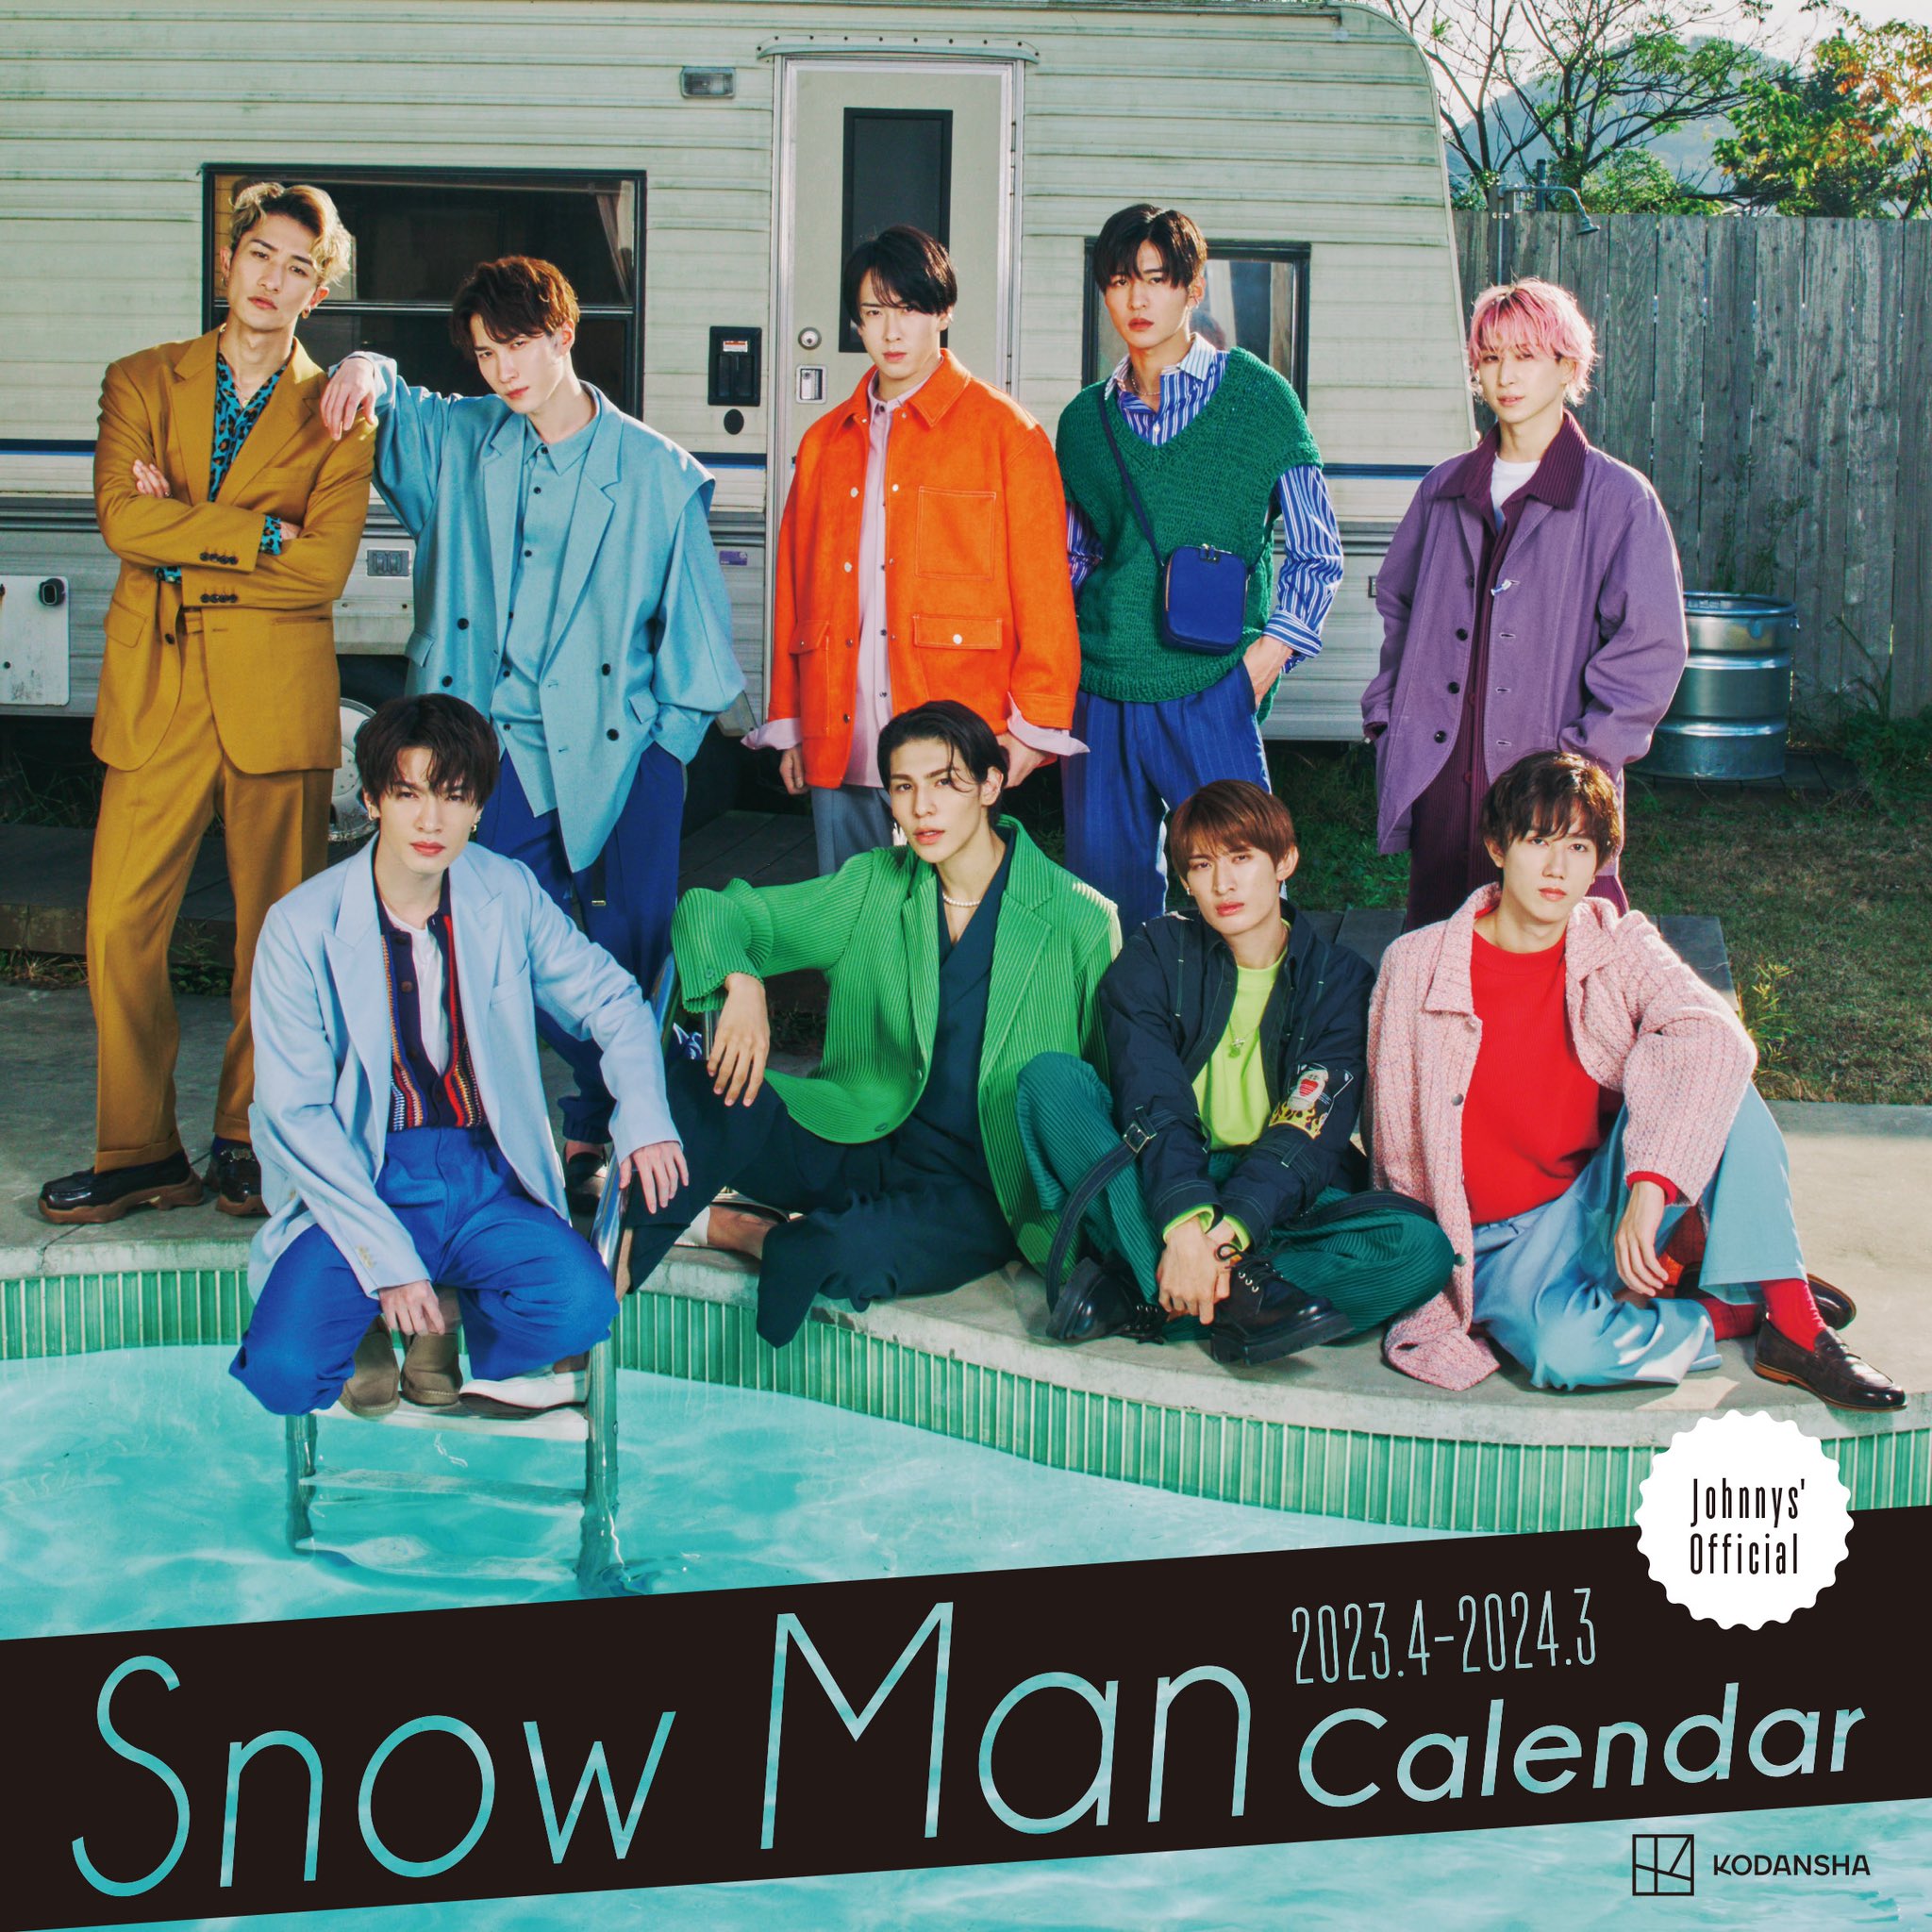 Snow Man 2023.4-2024.3 オフィシャルカレンダー 2023年3月9日発売決定！予約サイト、収録内容まとめ Snow Man  最新情報まとめ